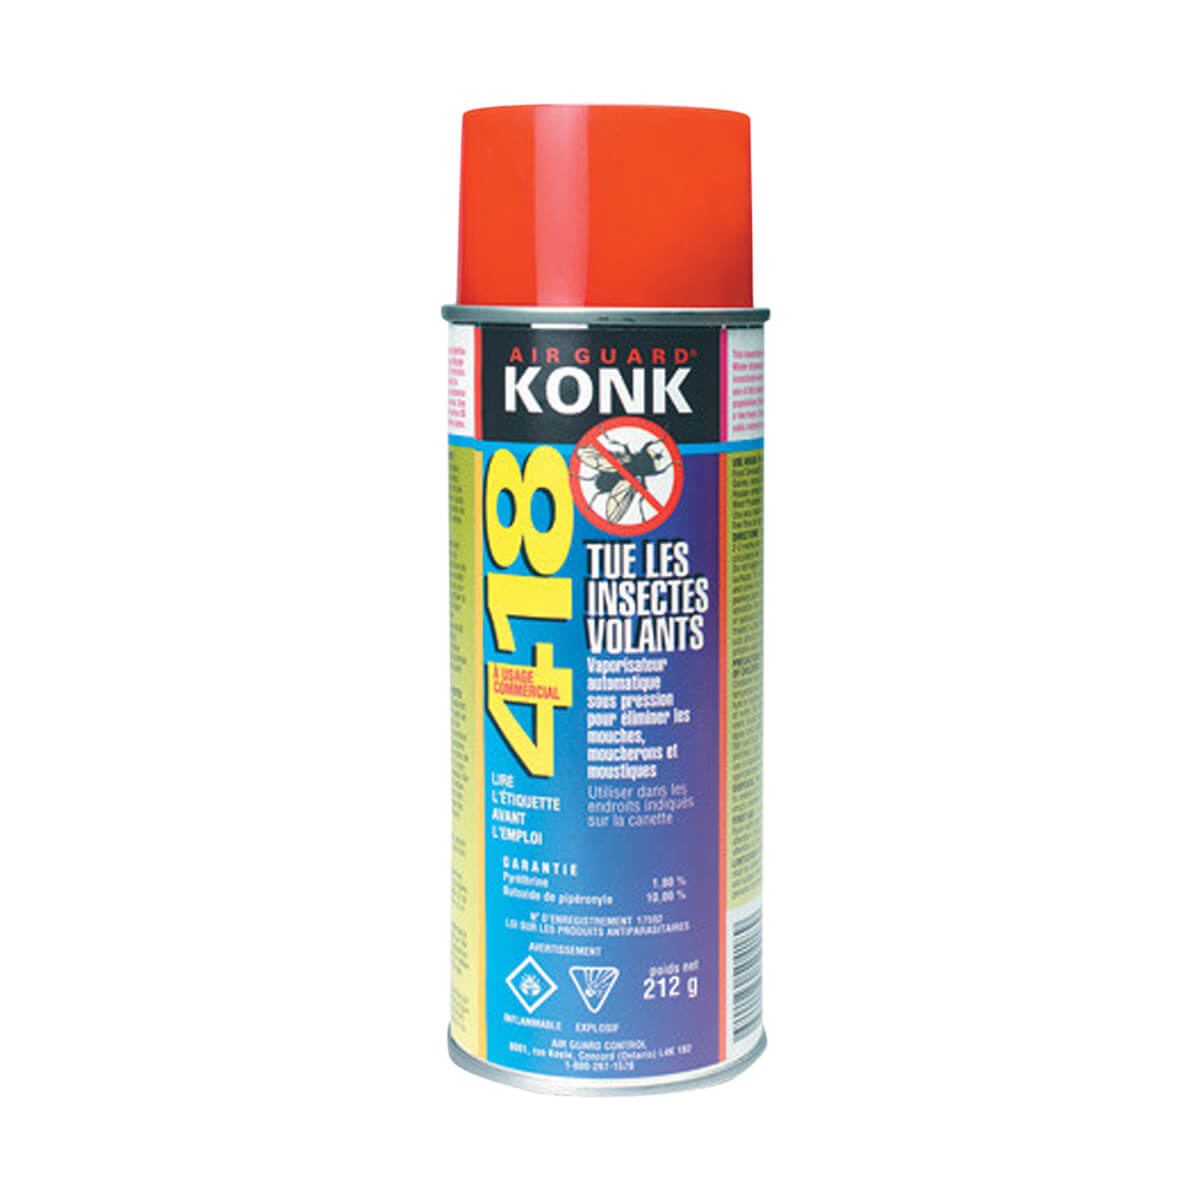 Konk 418 Flying Insect Killer - 212 g